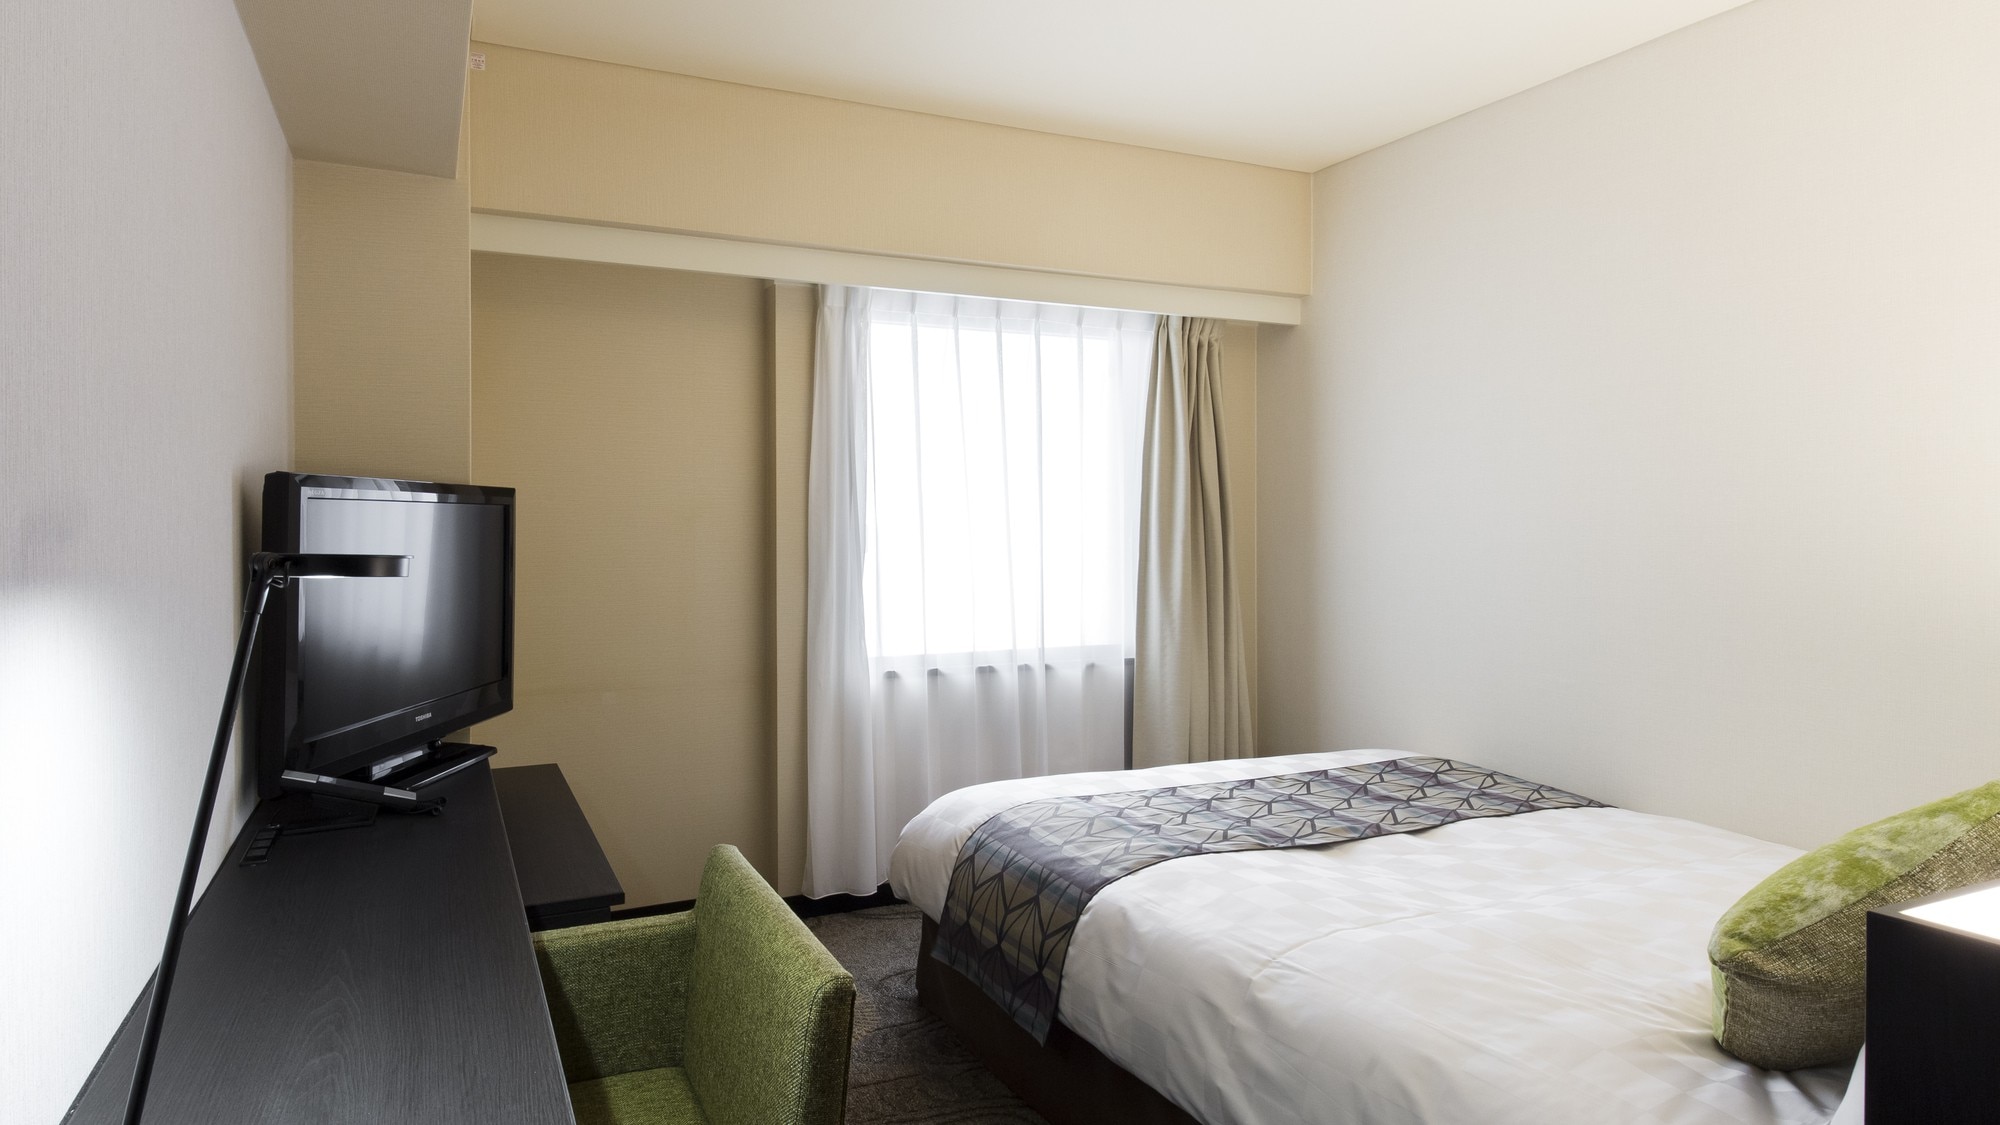 Standard single bed width 110 cm 15 m2 room